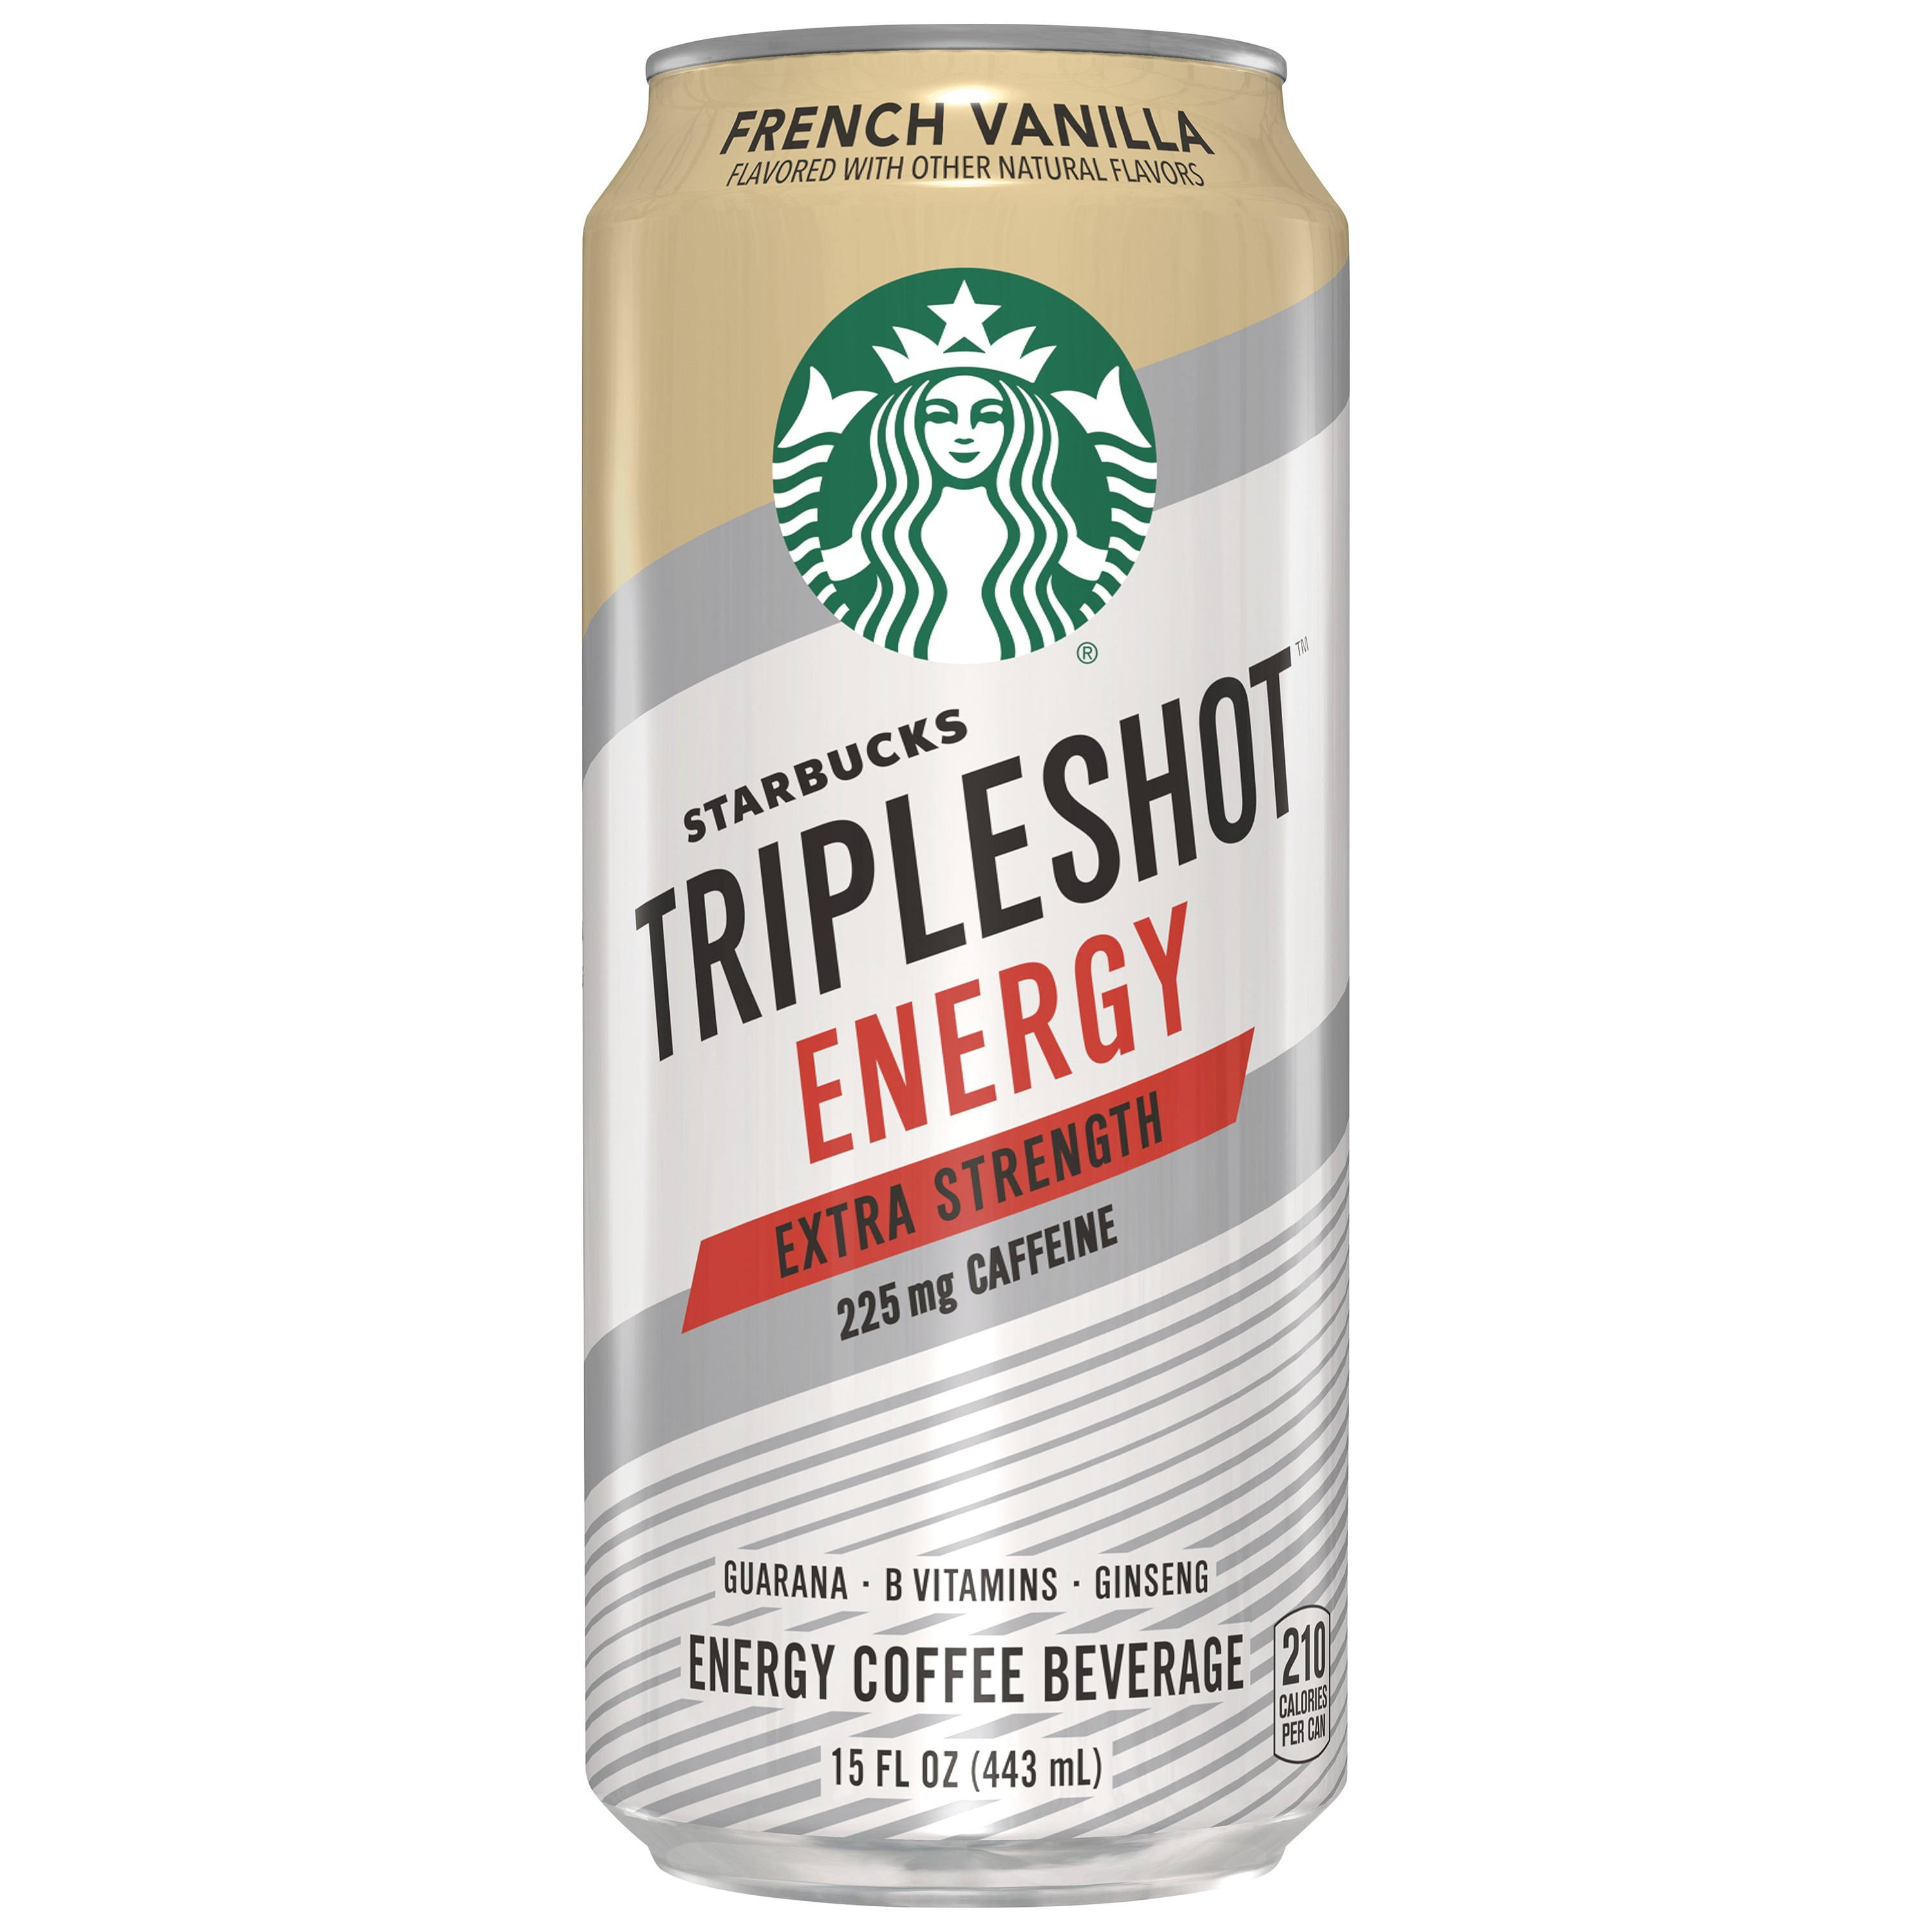 Starbucks Tripleshot Energy Extra Strength Energy Coffee Beverage - French Vanilla, 15oz